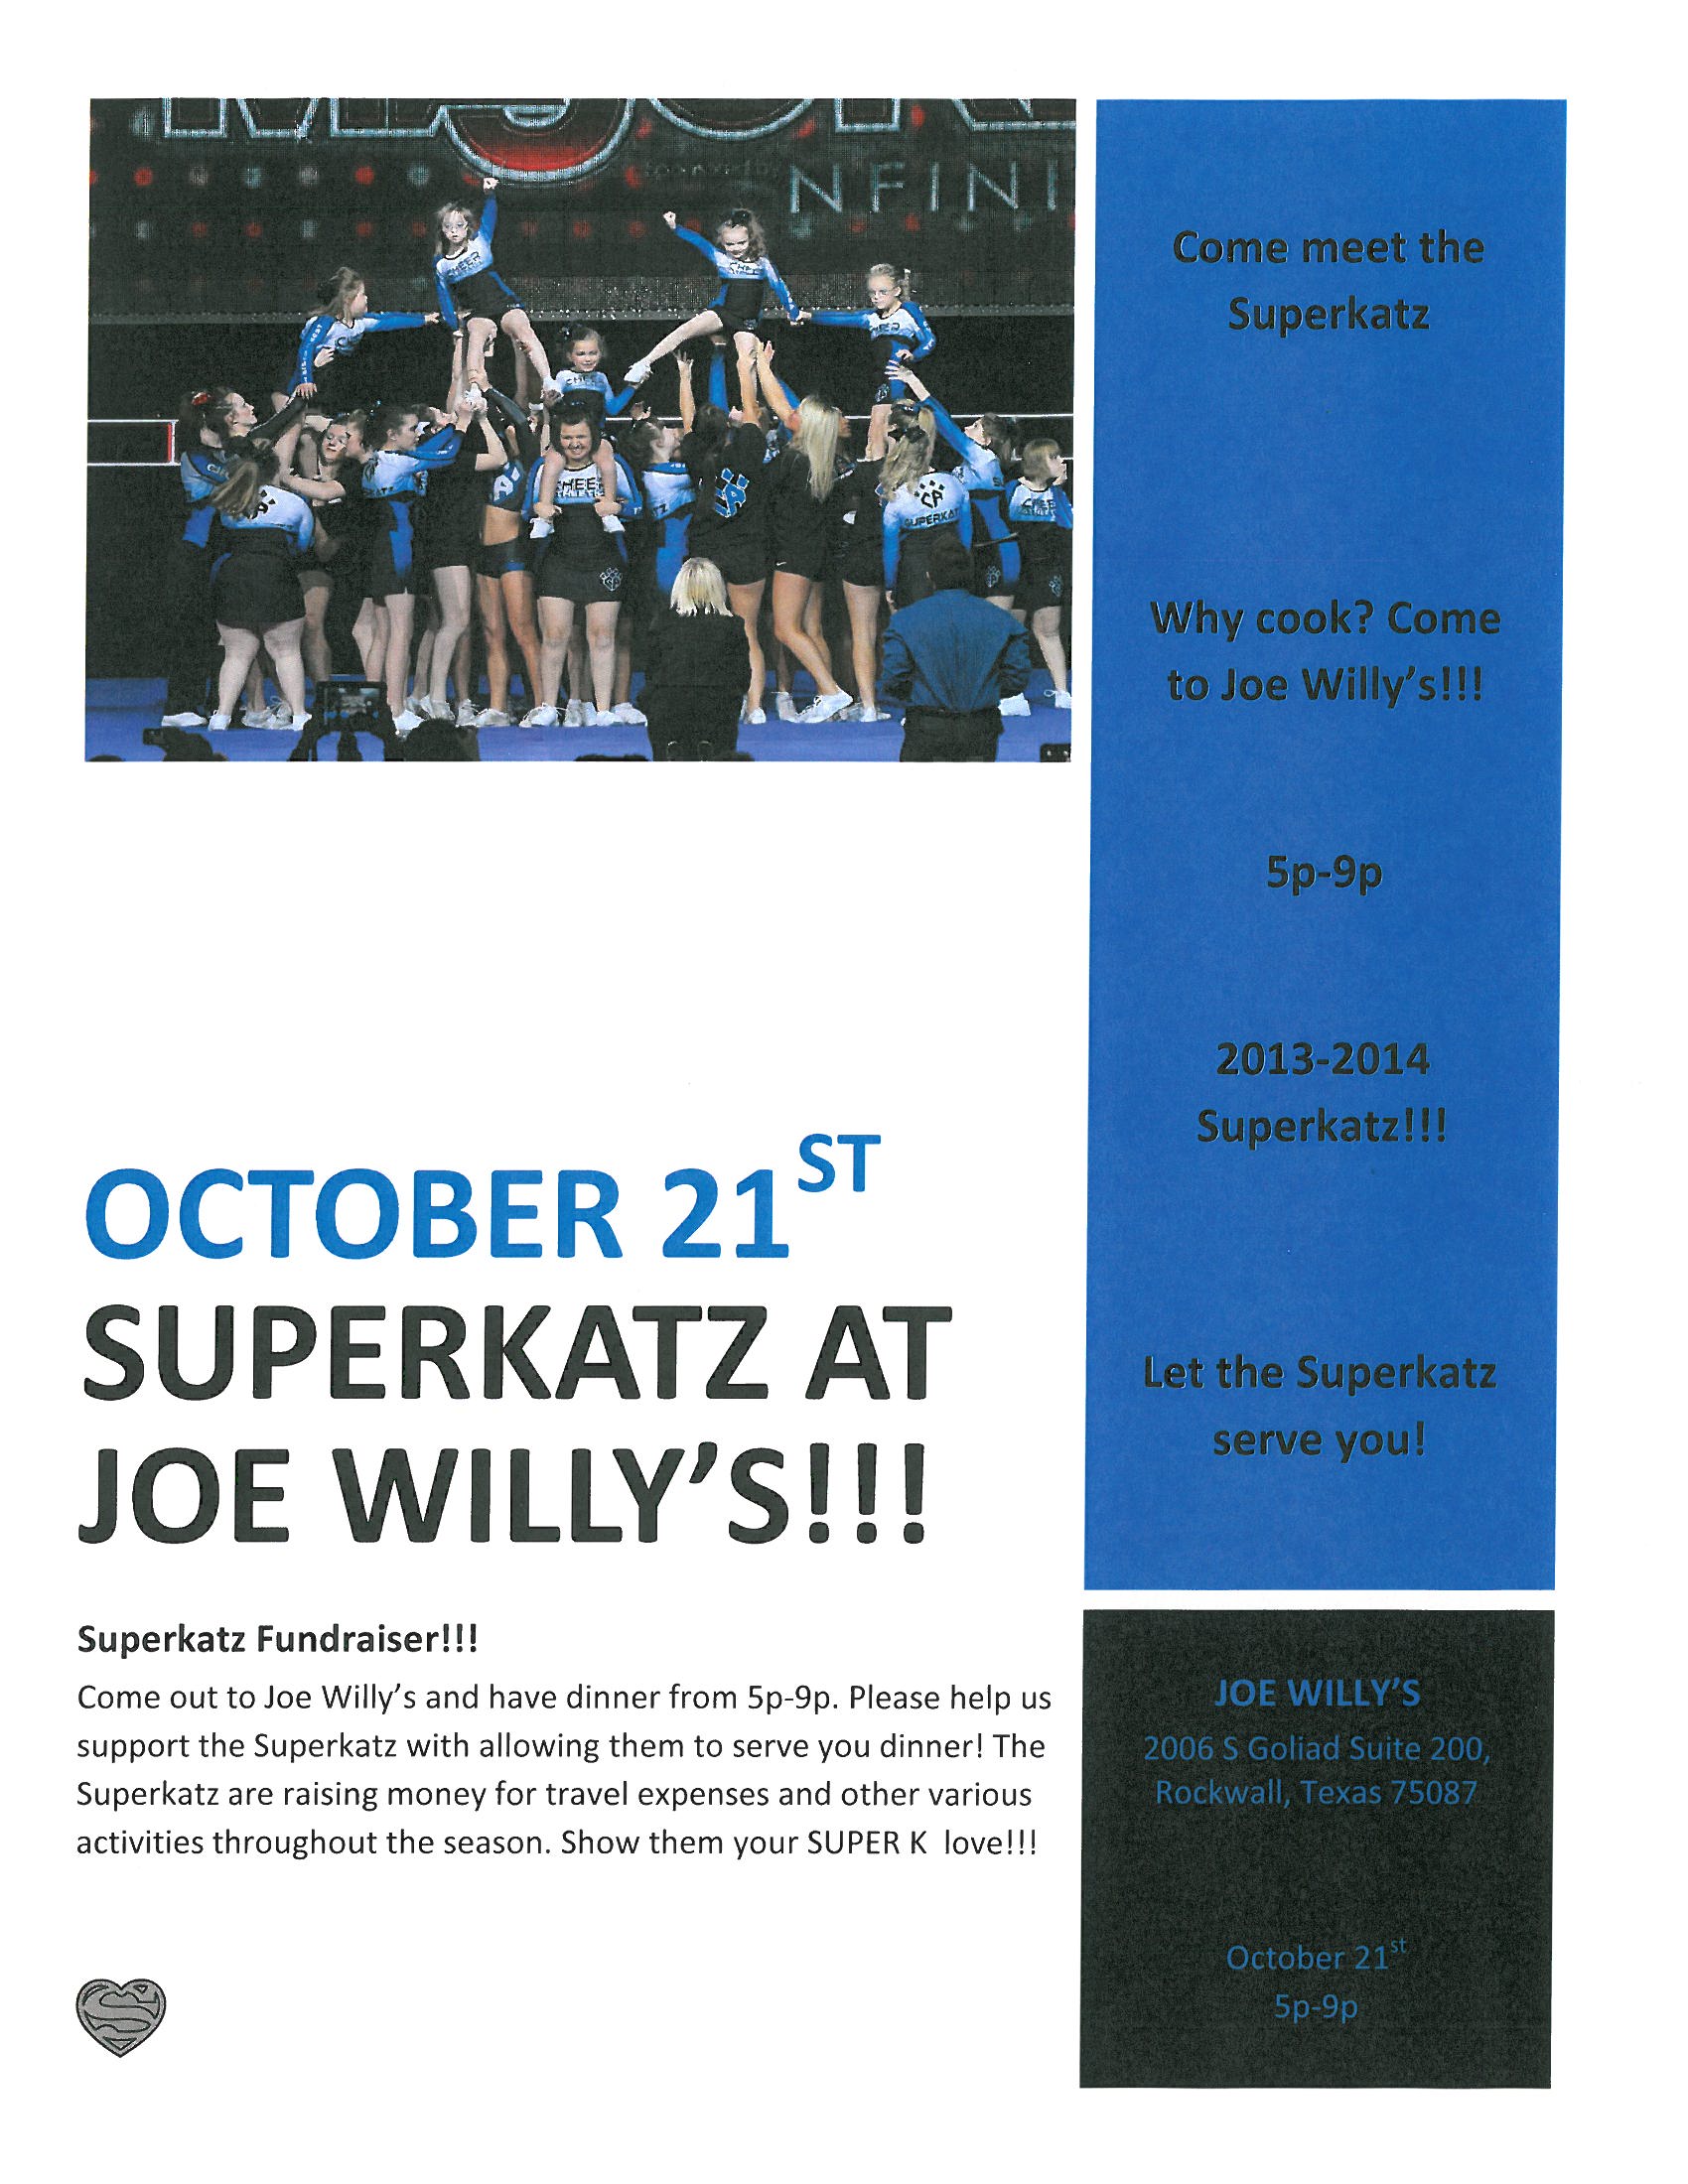 Superkatz cheer team fundraising event at Joe Willy’s Oct 21